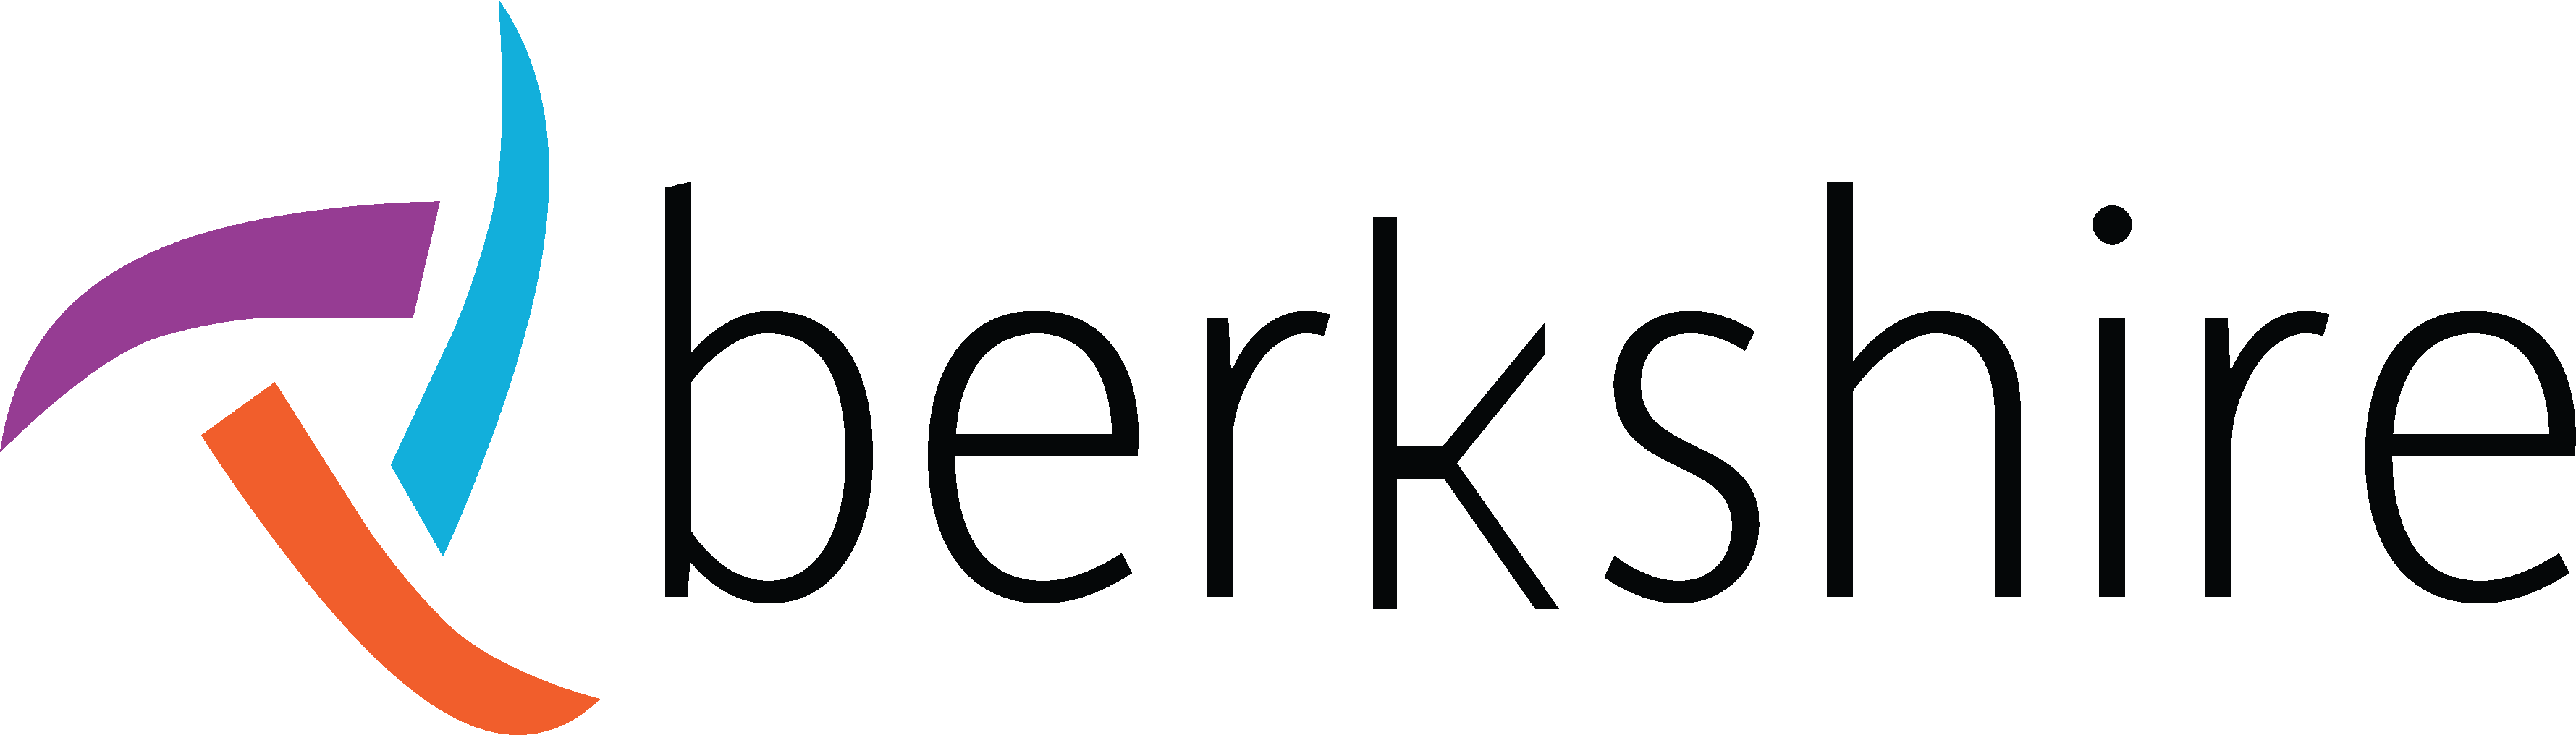 berkshire logo